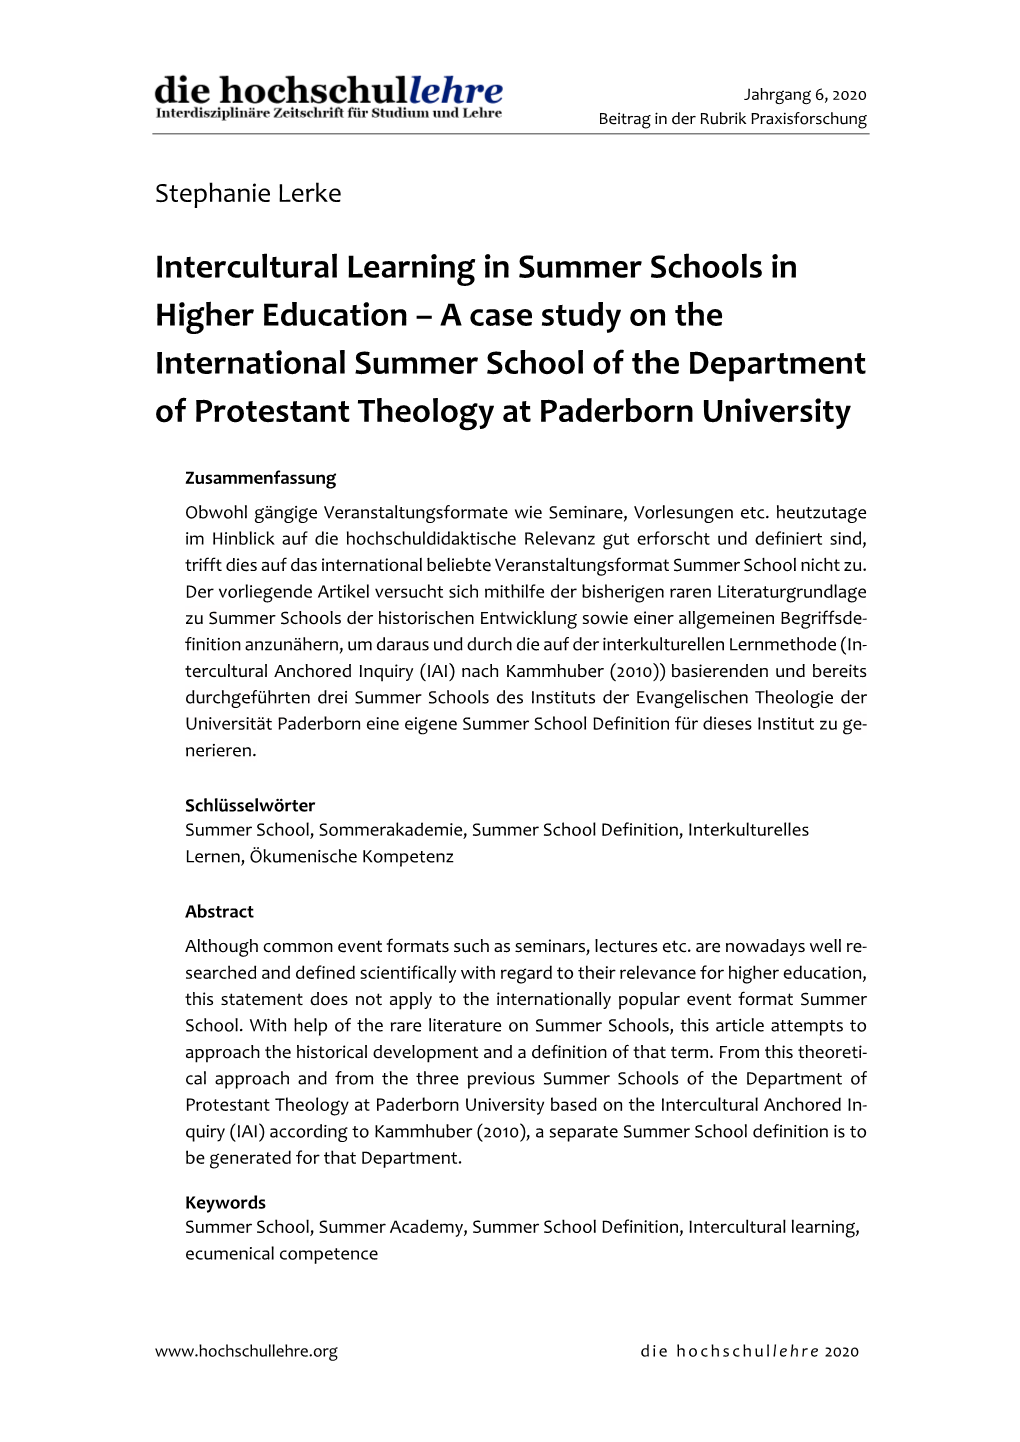 Intercultural Learning in Summer Schools In